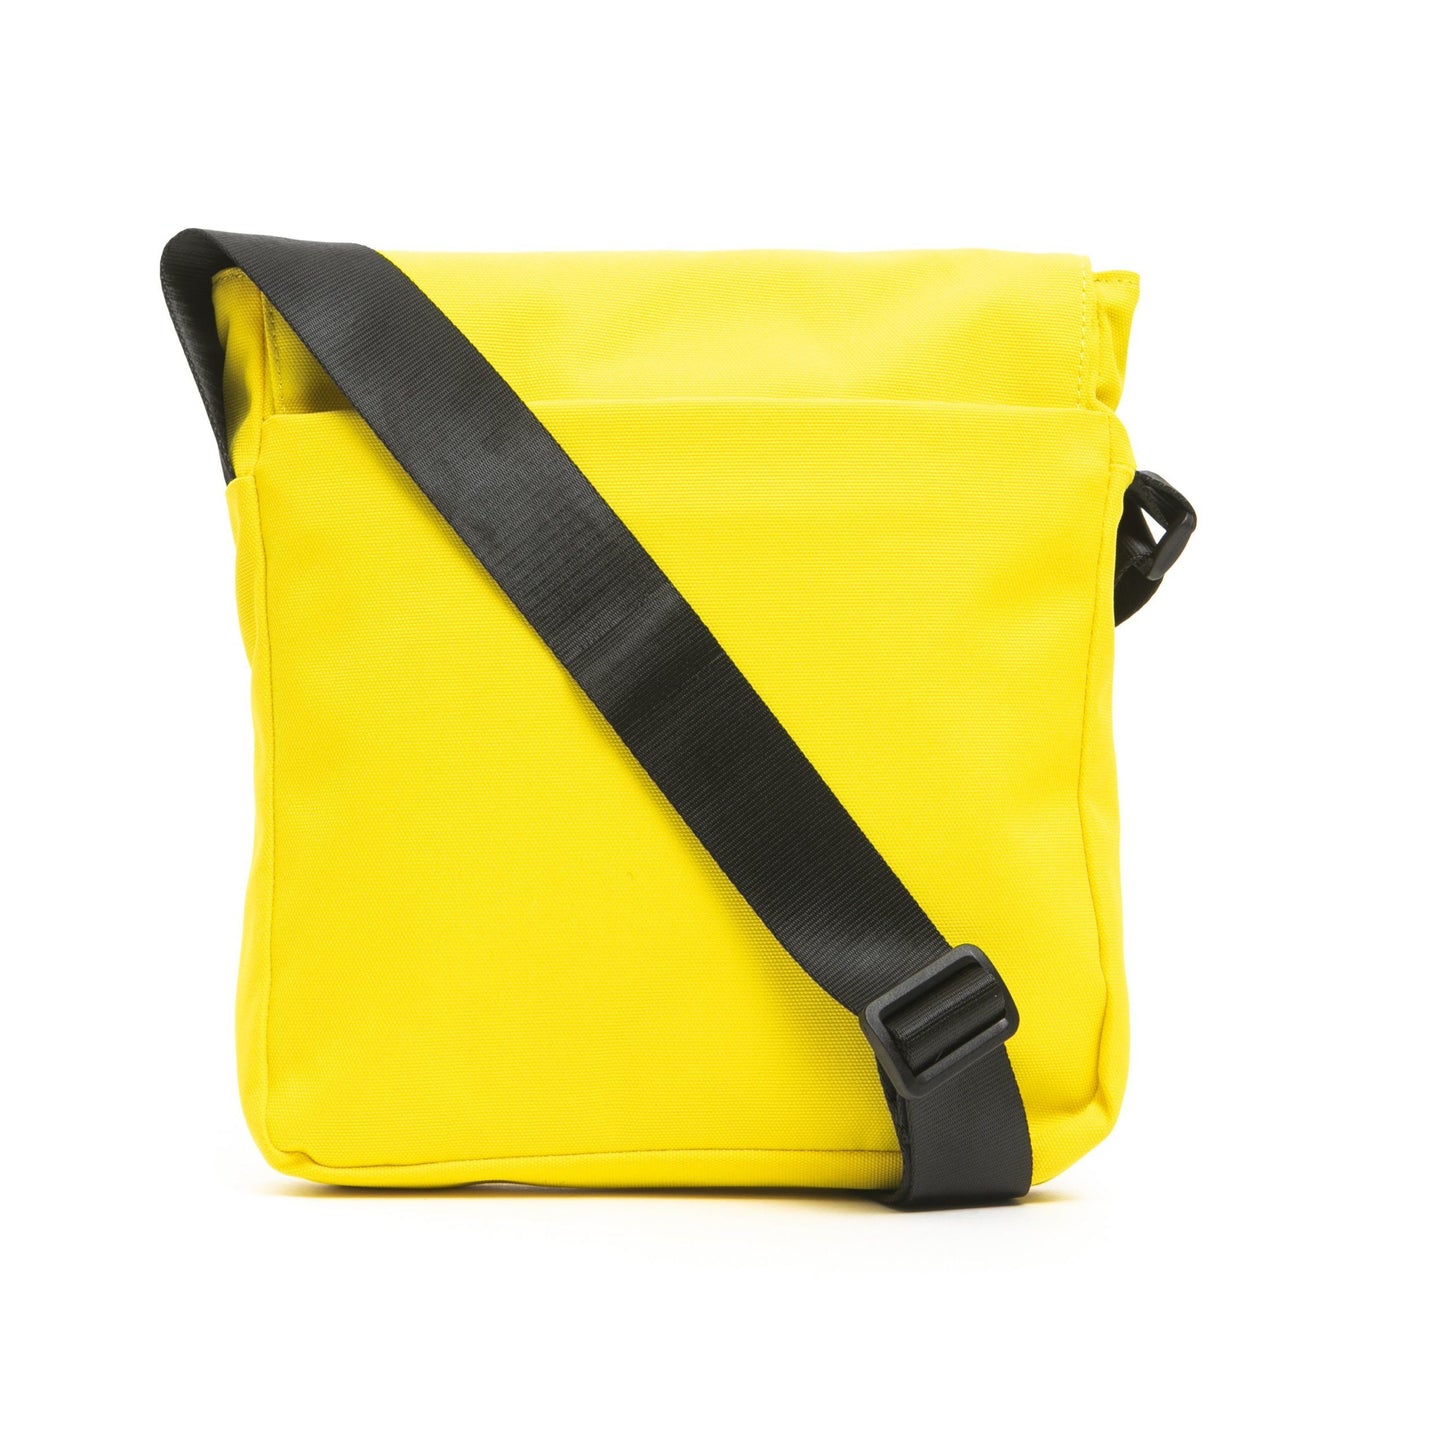 Sleek Yellow Satchel with Strap Flap Closure